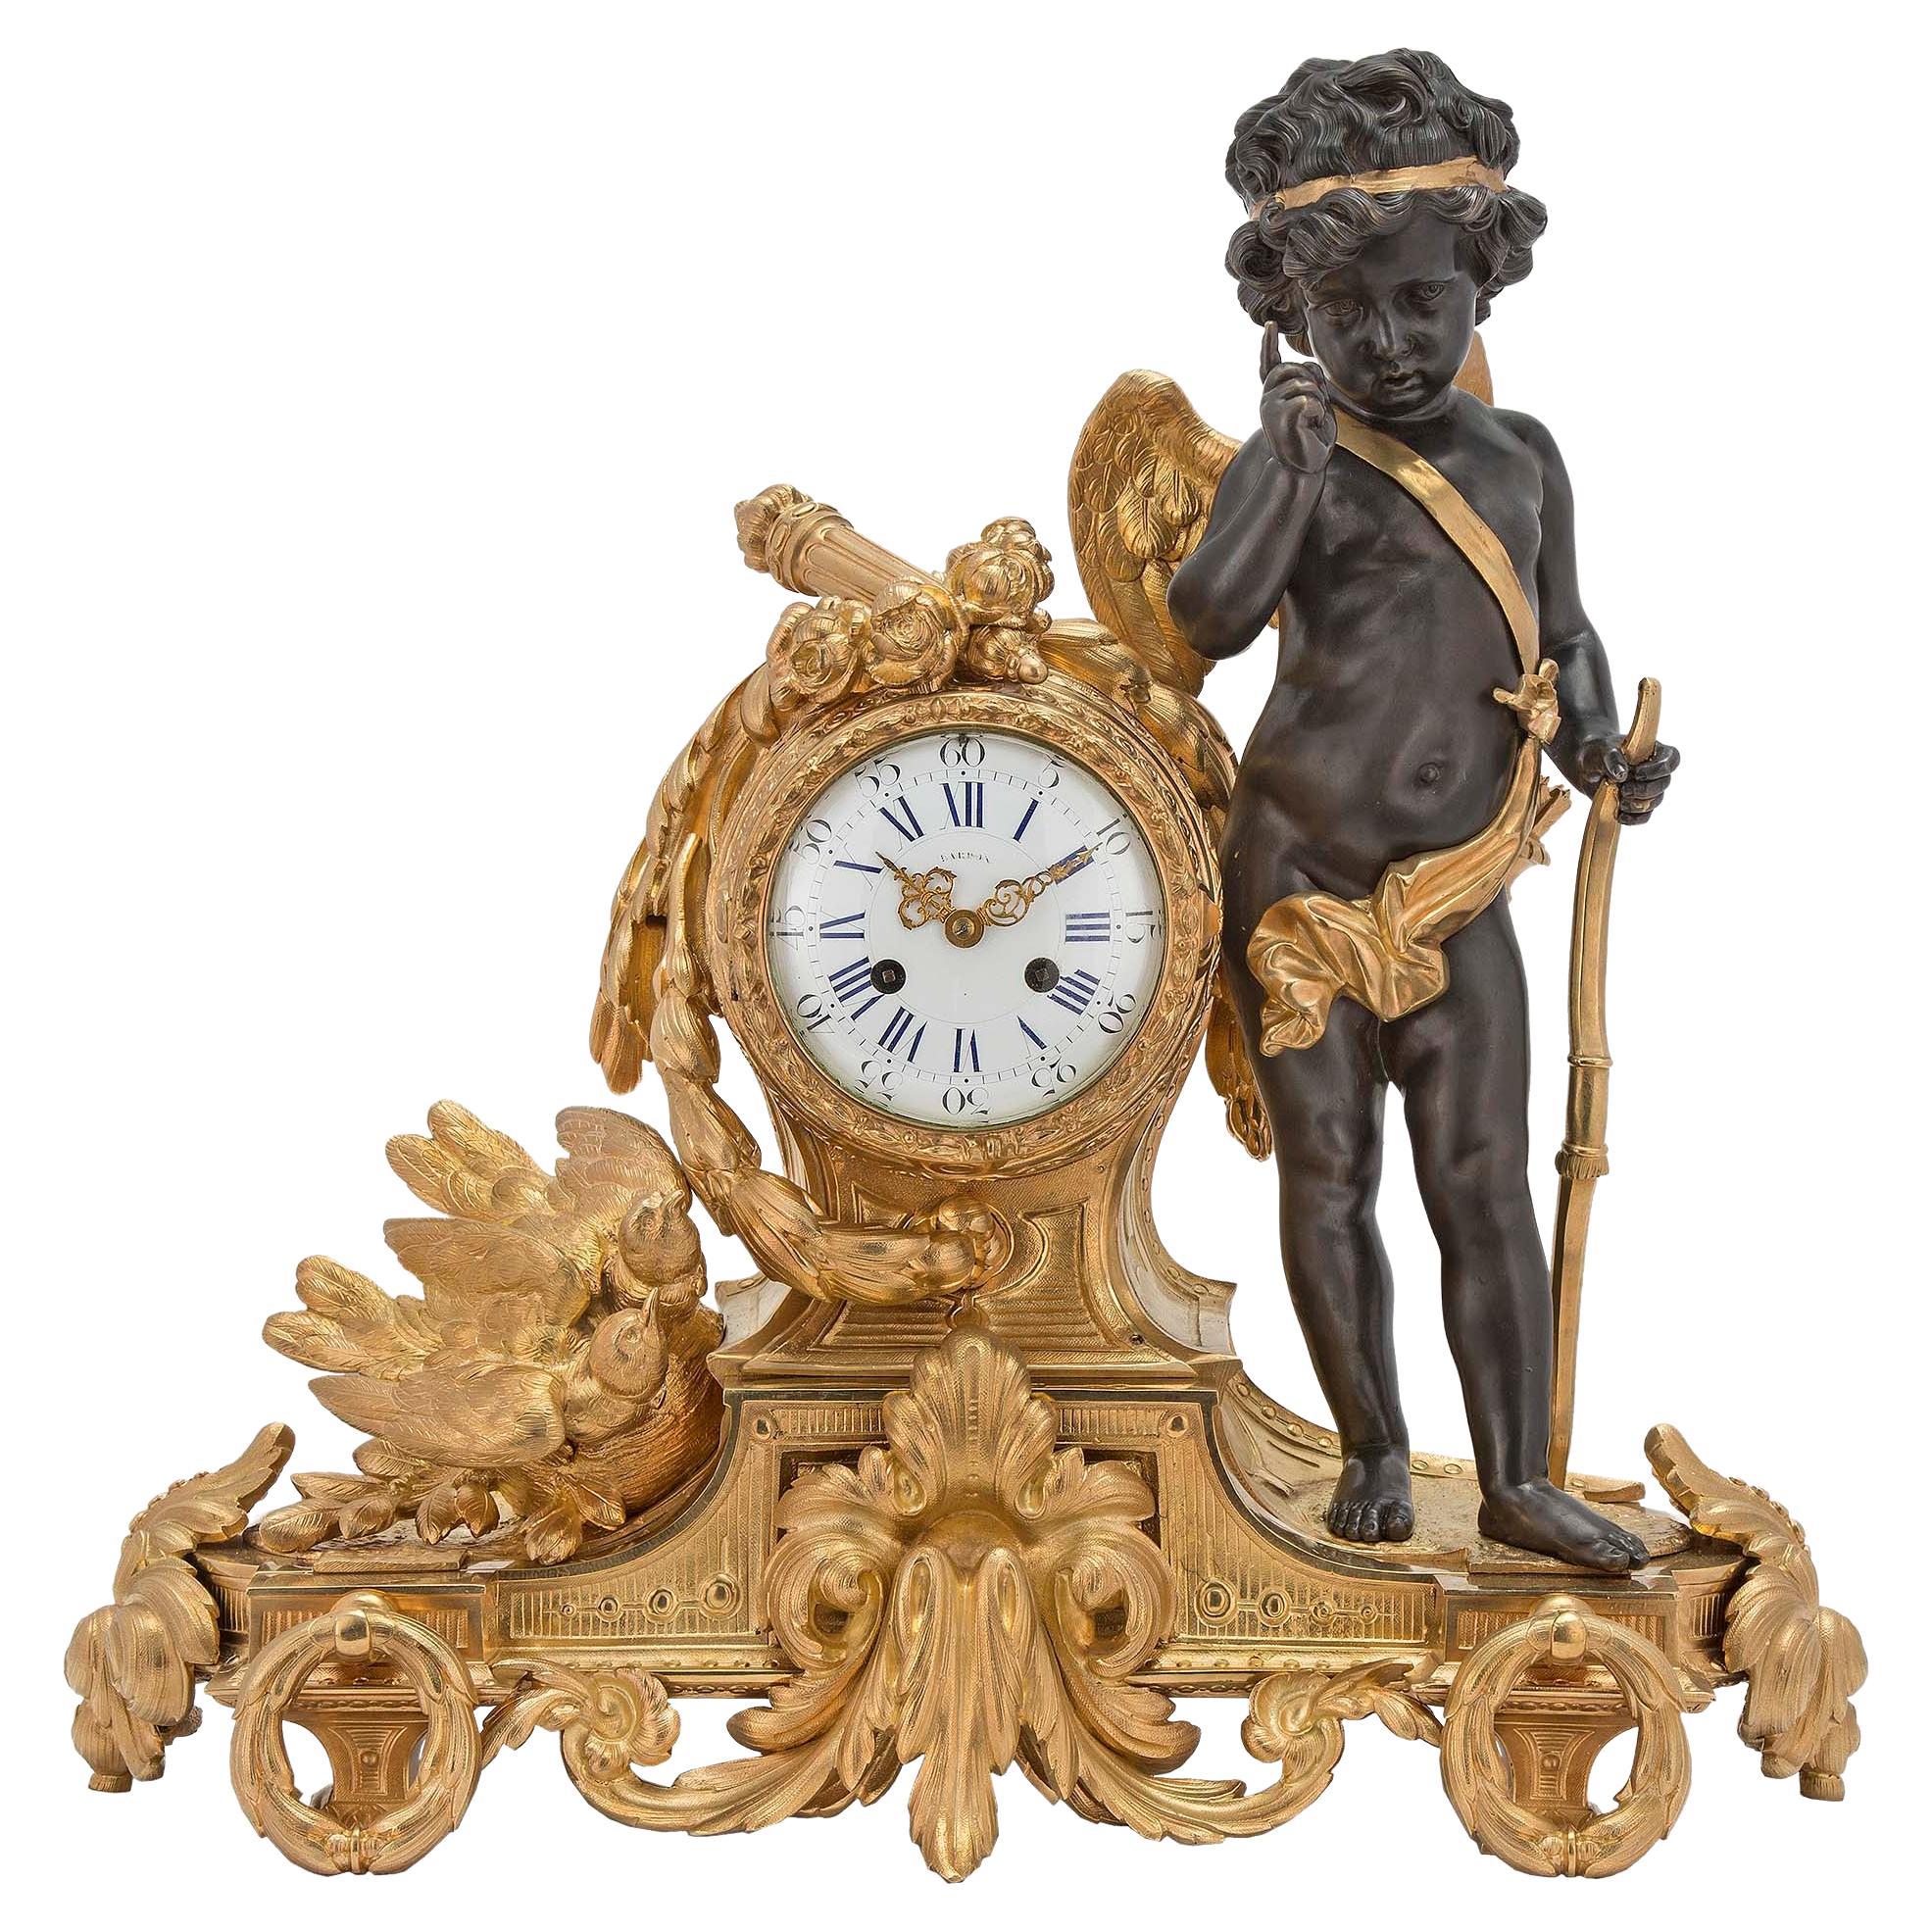 Japy freres часы. Louis XVI Mirabeau-1404 часы. Часы в стиле Барокко настольные. Часы настольные бронза Барокко. 1404 на часах